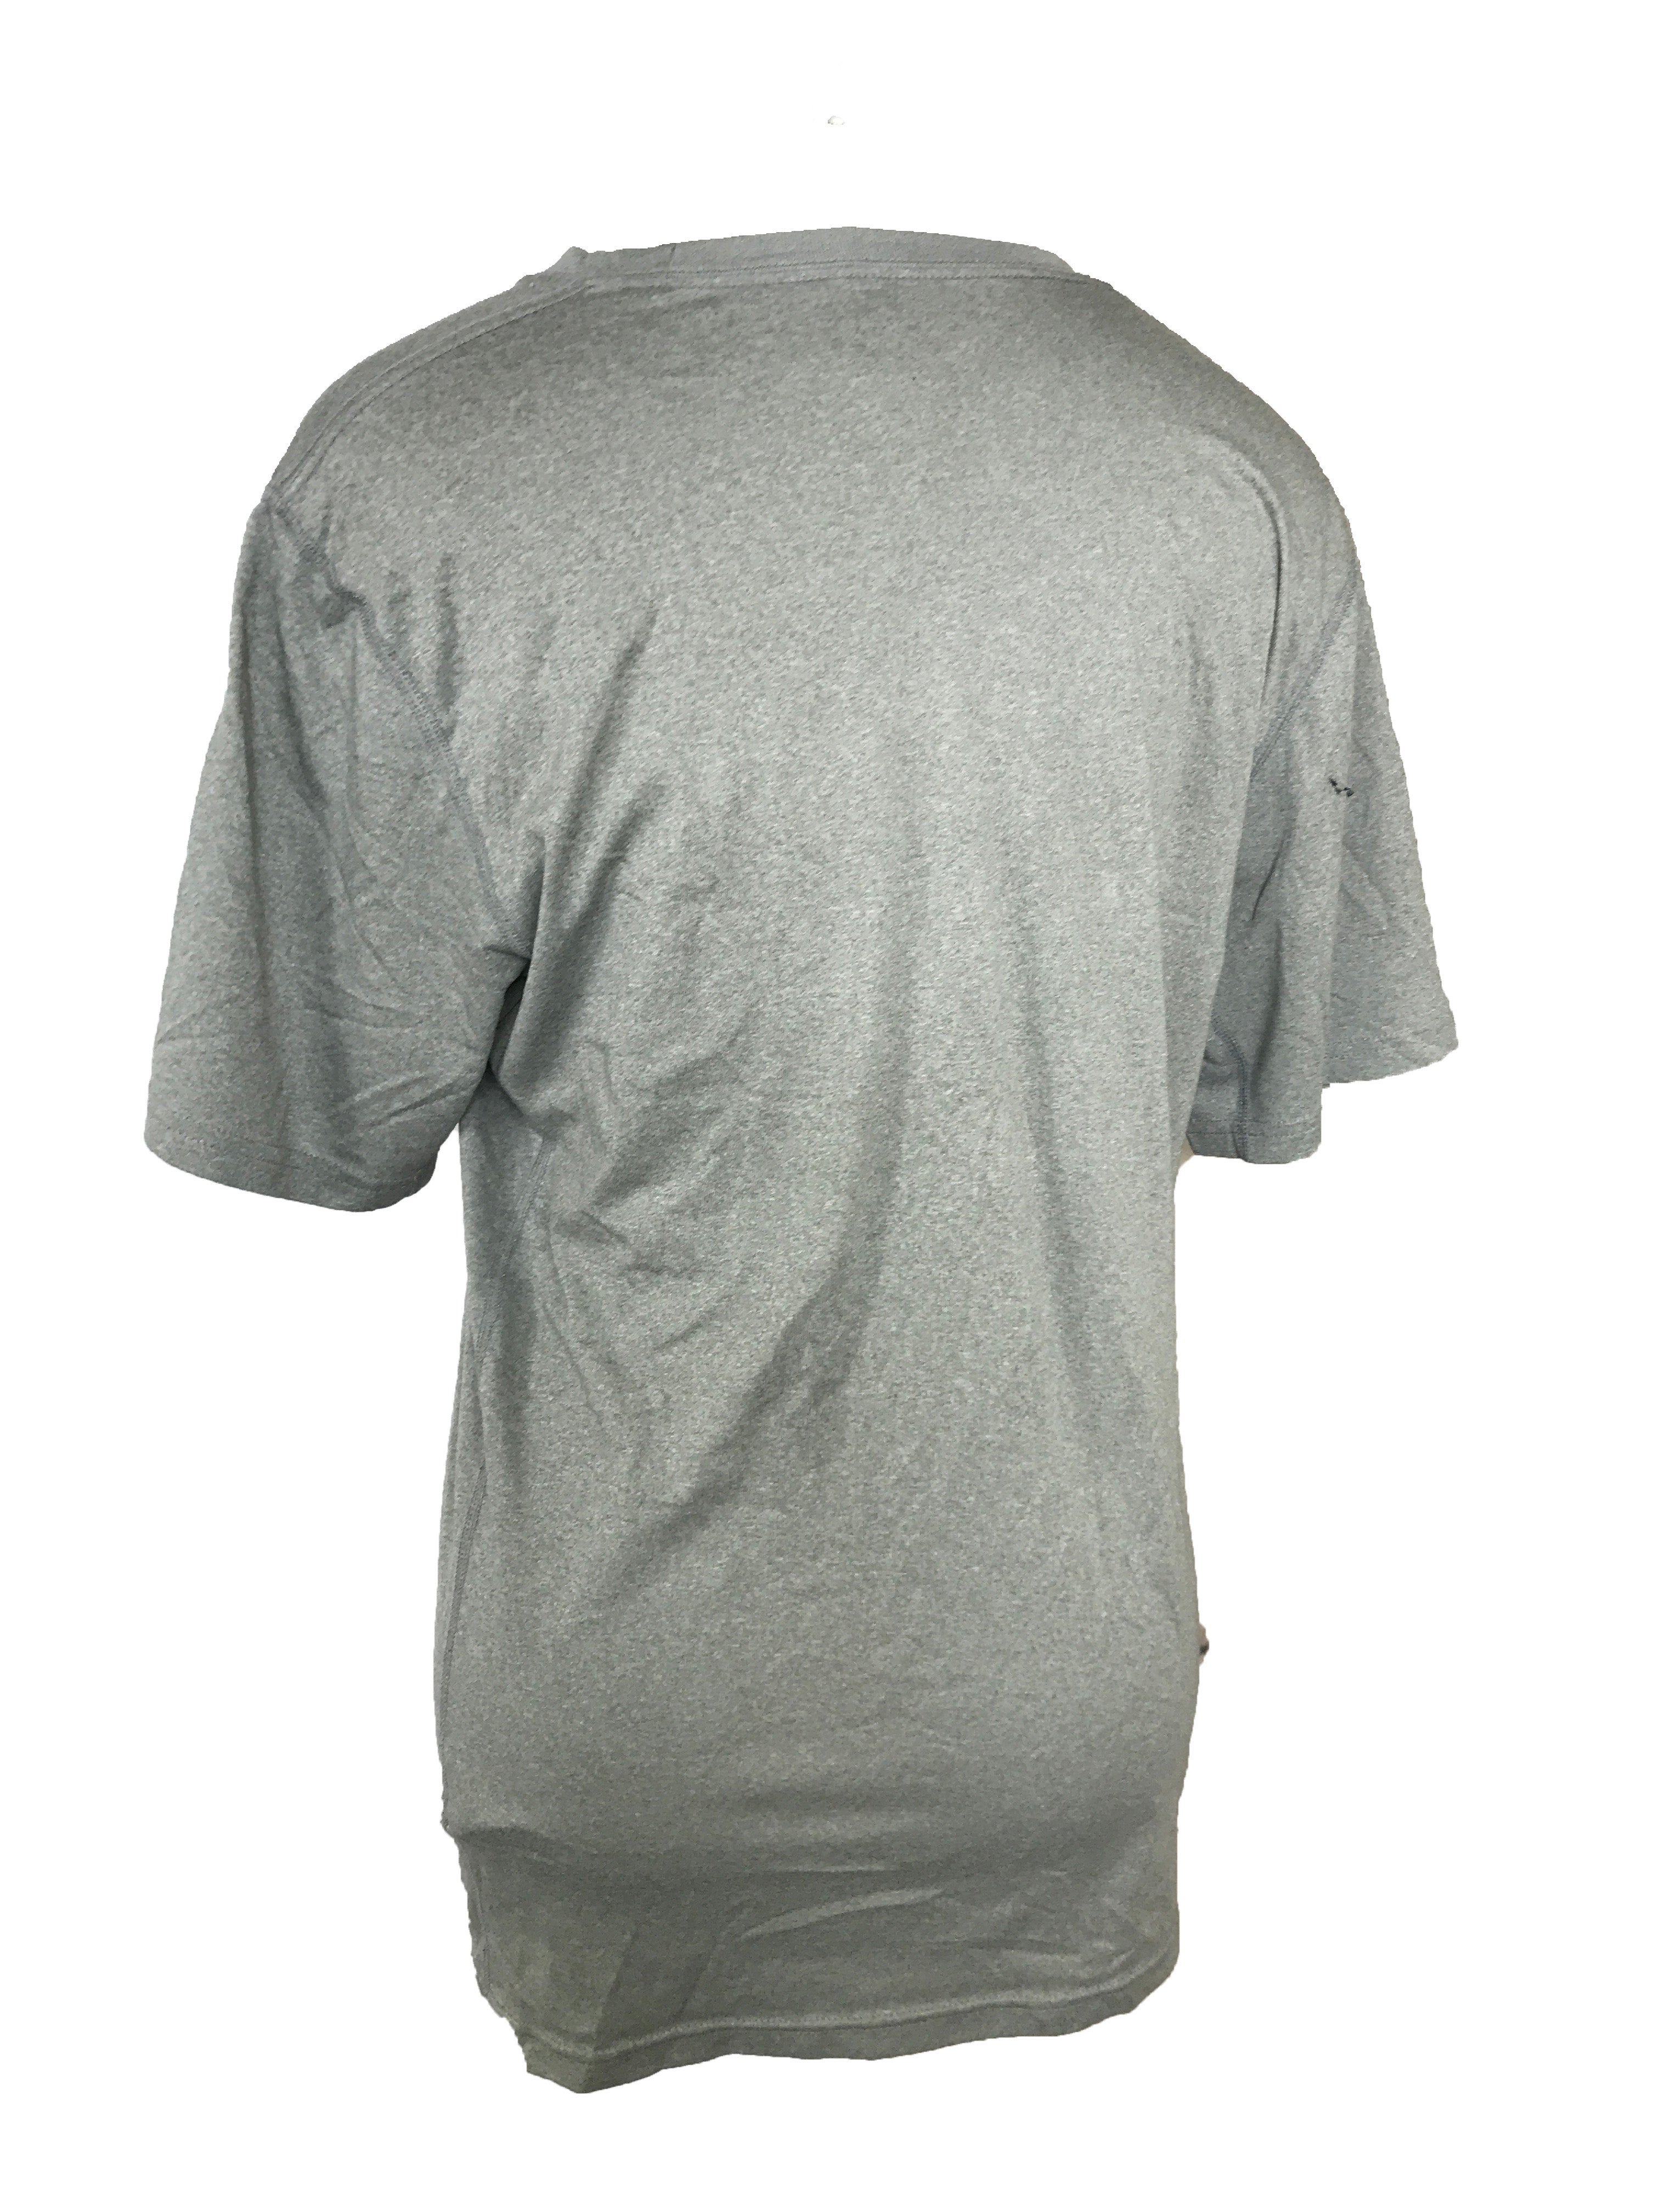 Nike Grey Iowa Football T-Shirt Men's Size S